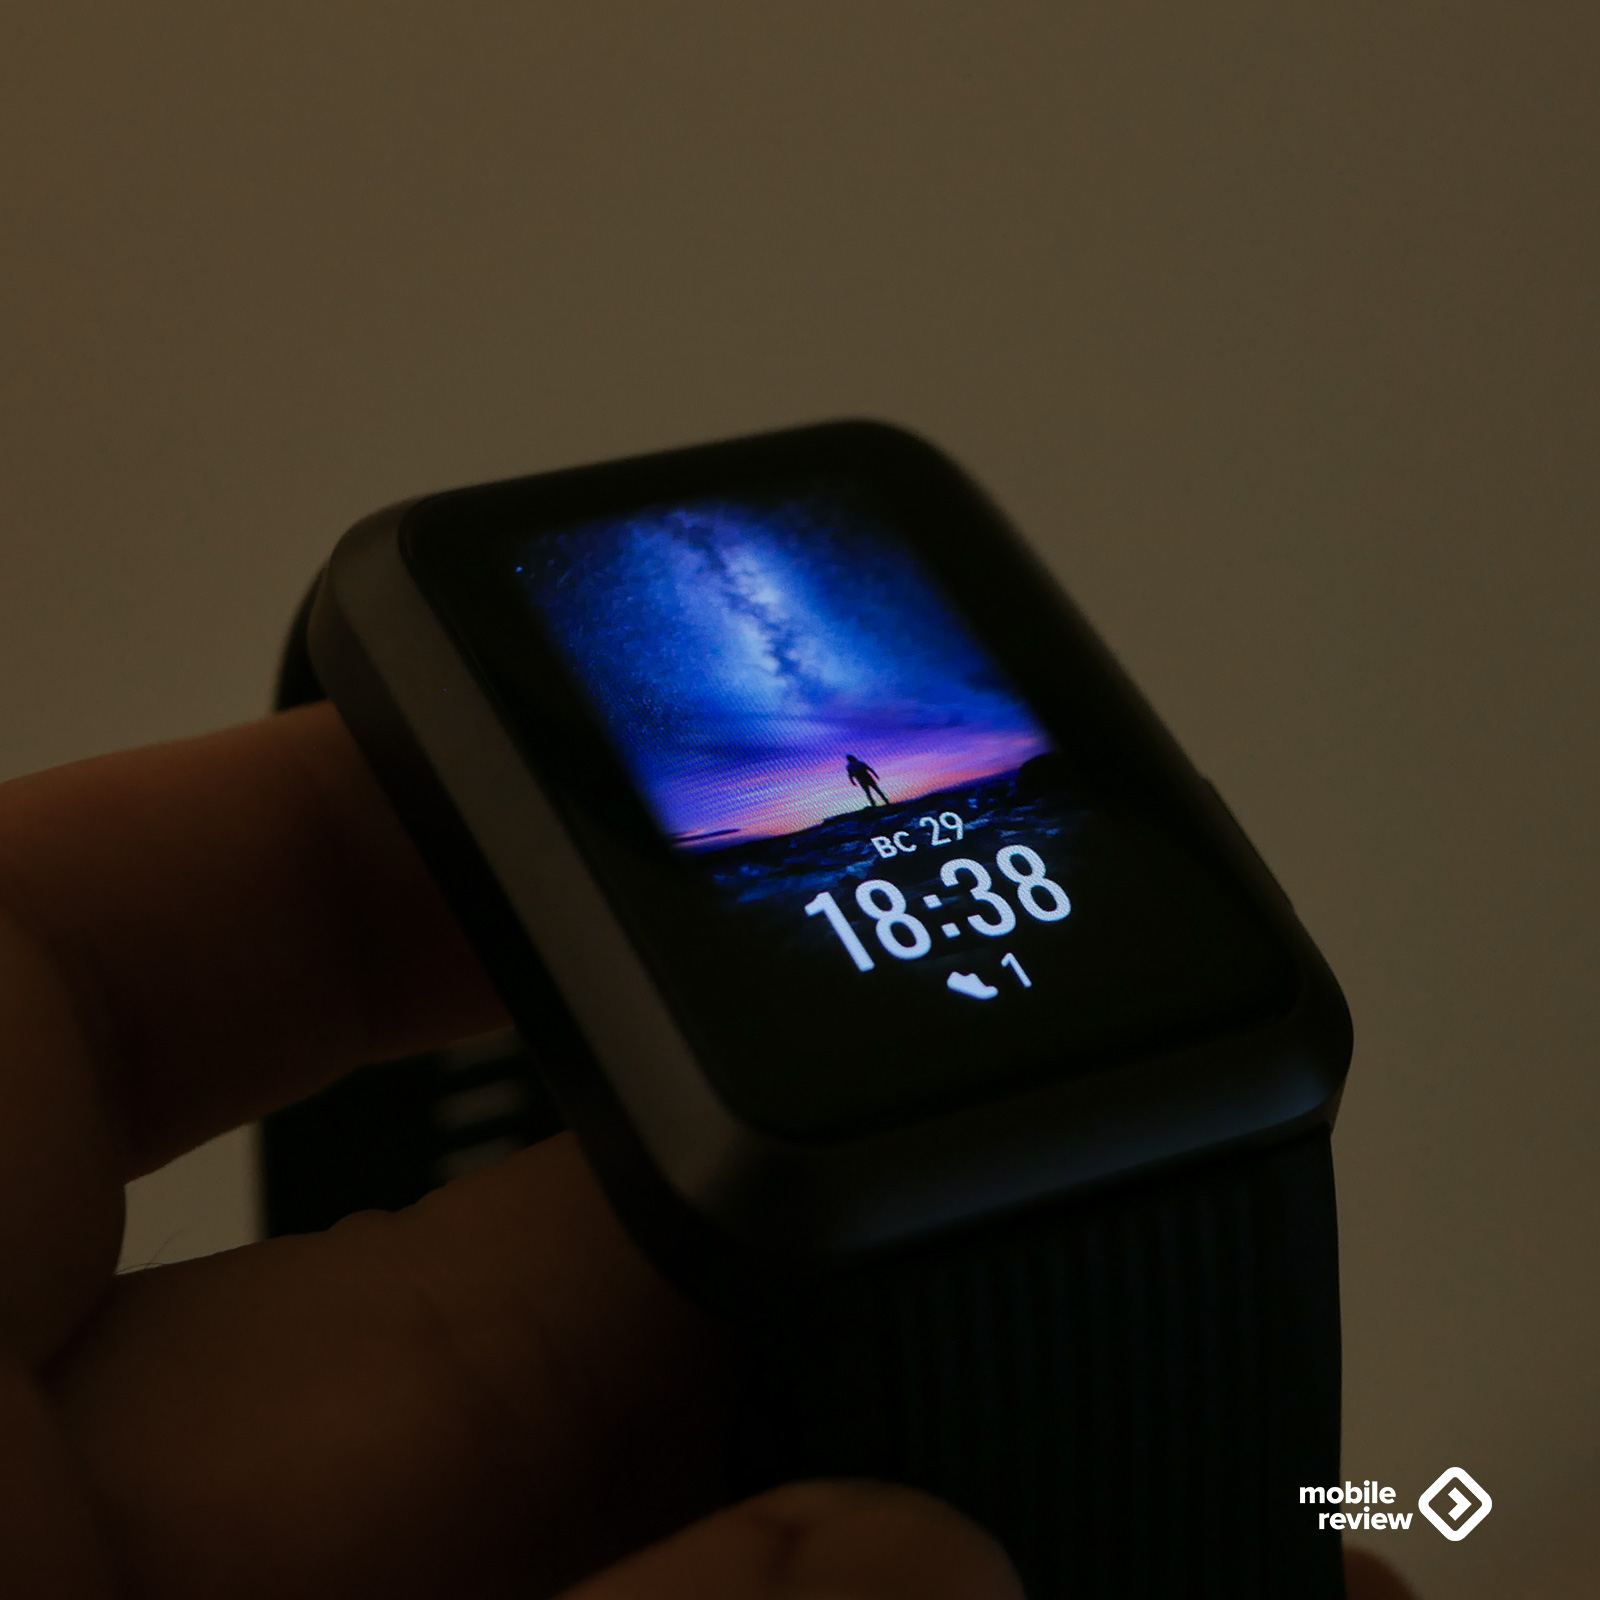 Впечатление от Huawei Watch D